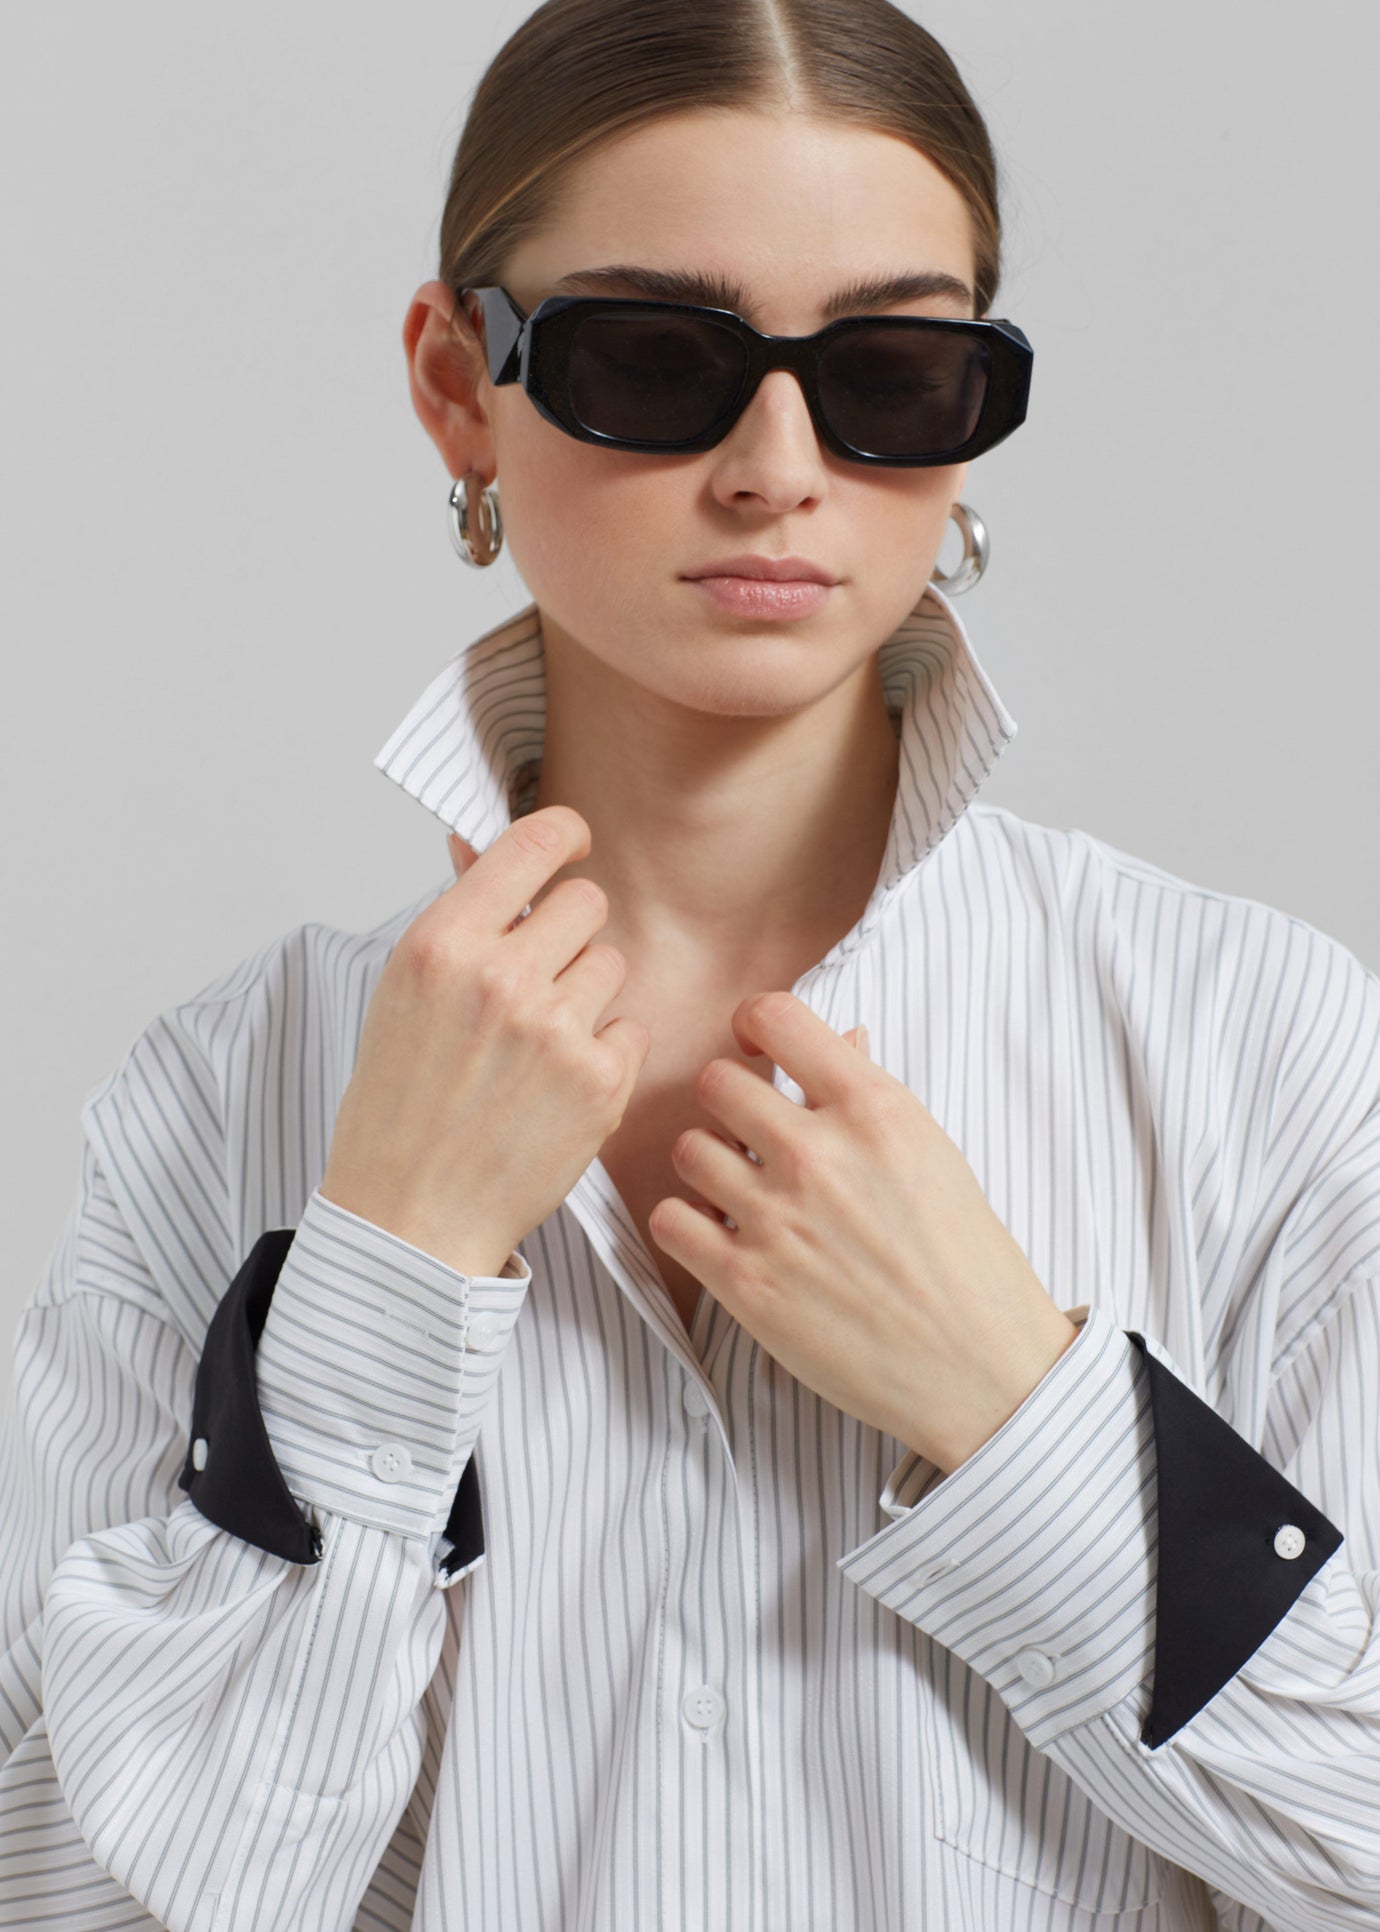 Leona Button Up Shirt - White/Grey Stripe - 1